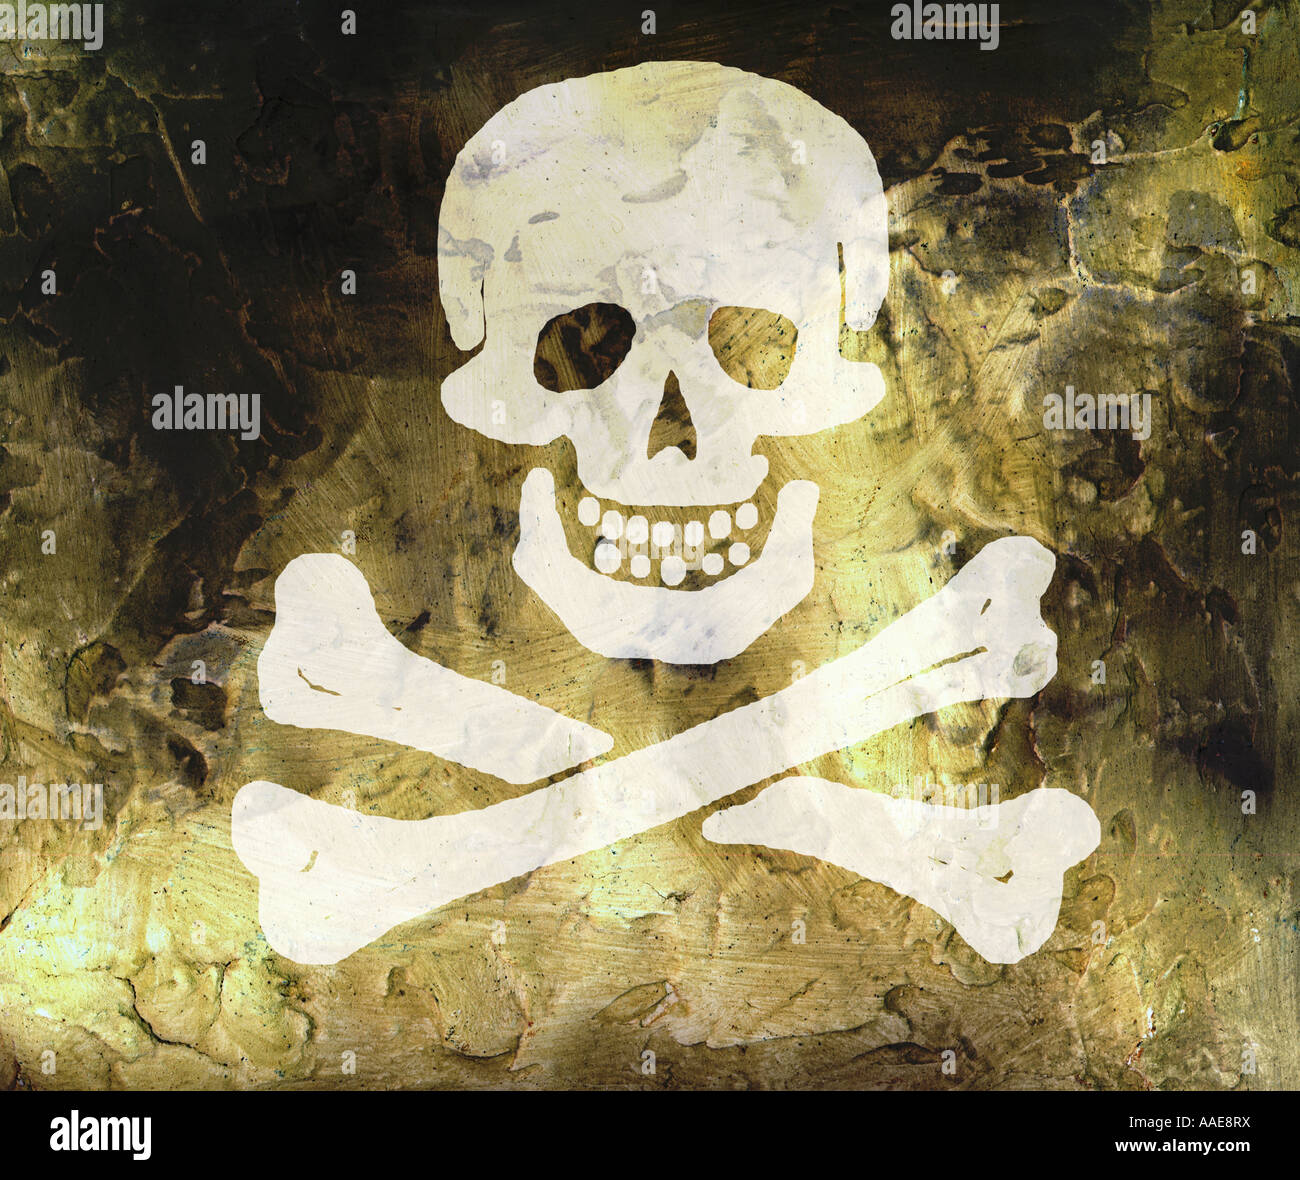 Skull and cross bones illustration Stock Photo